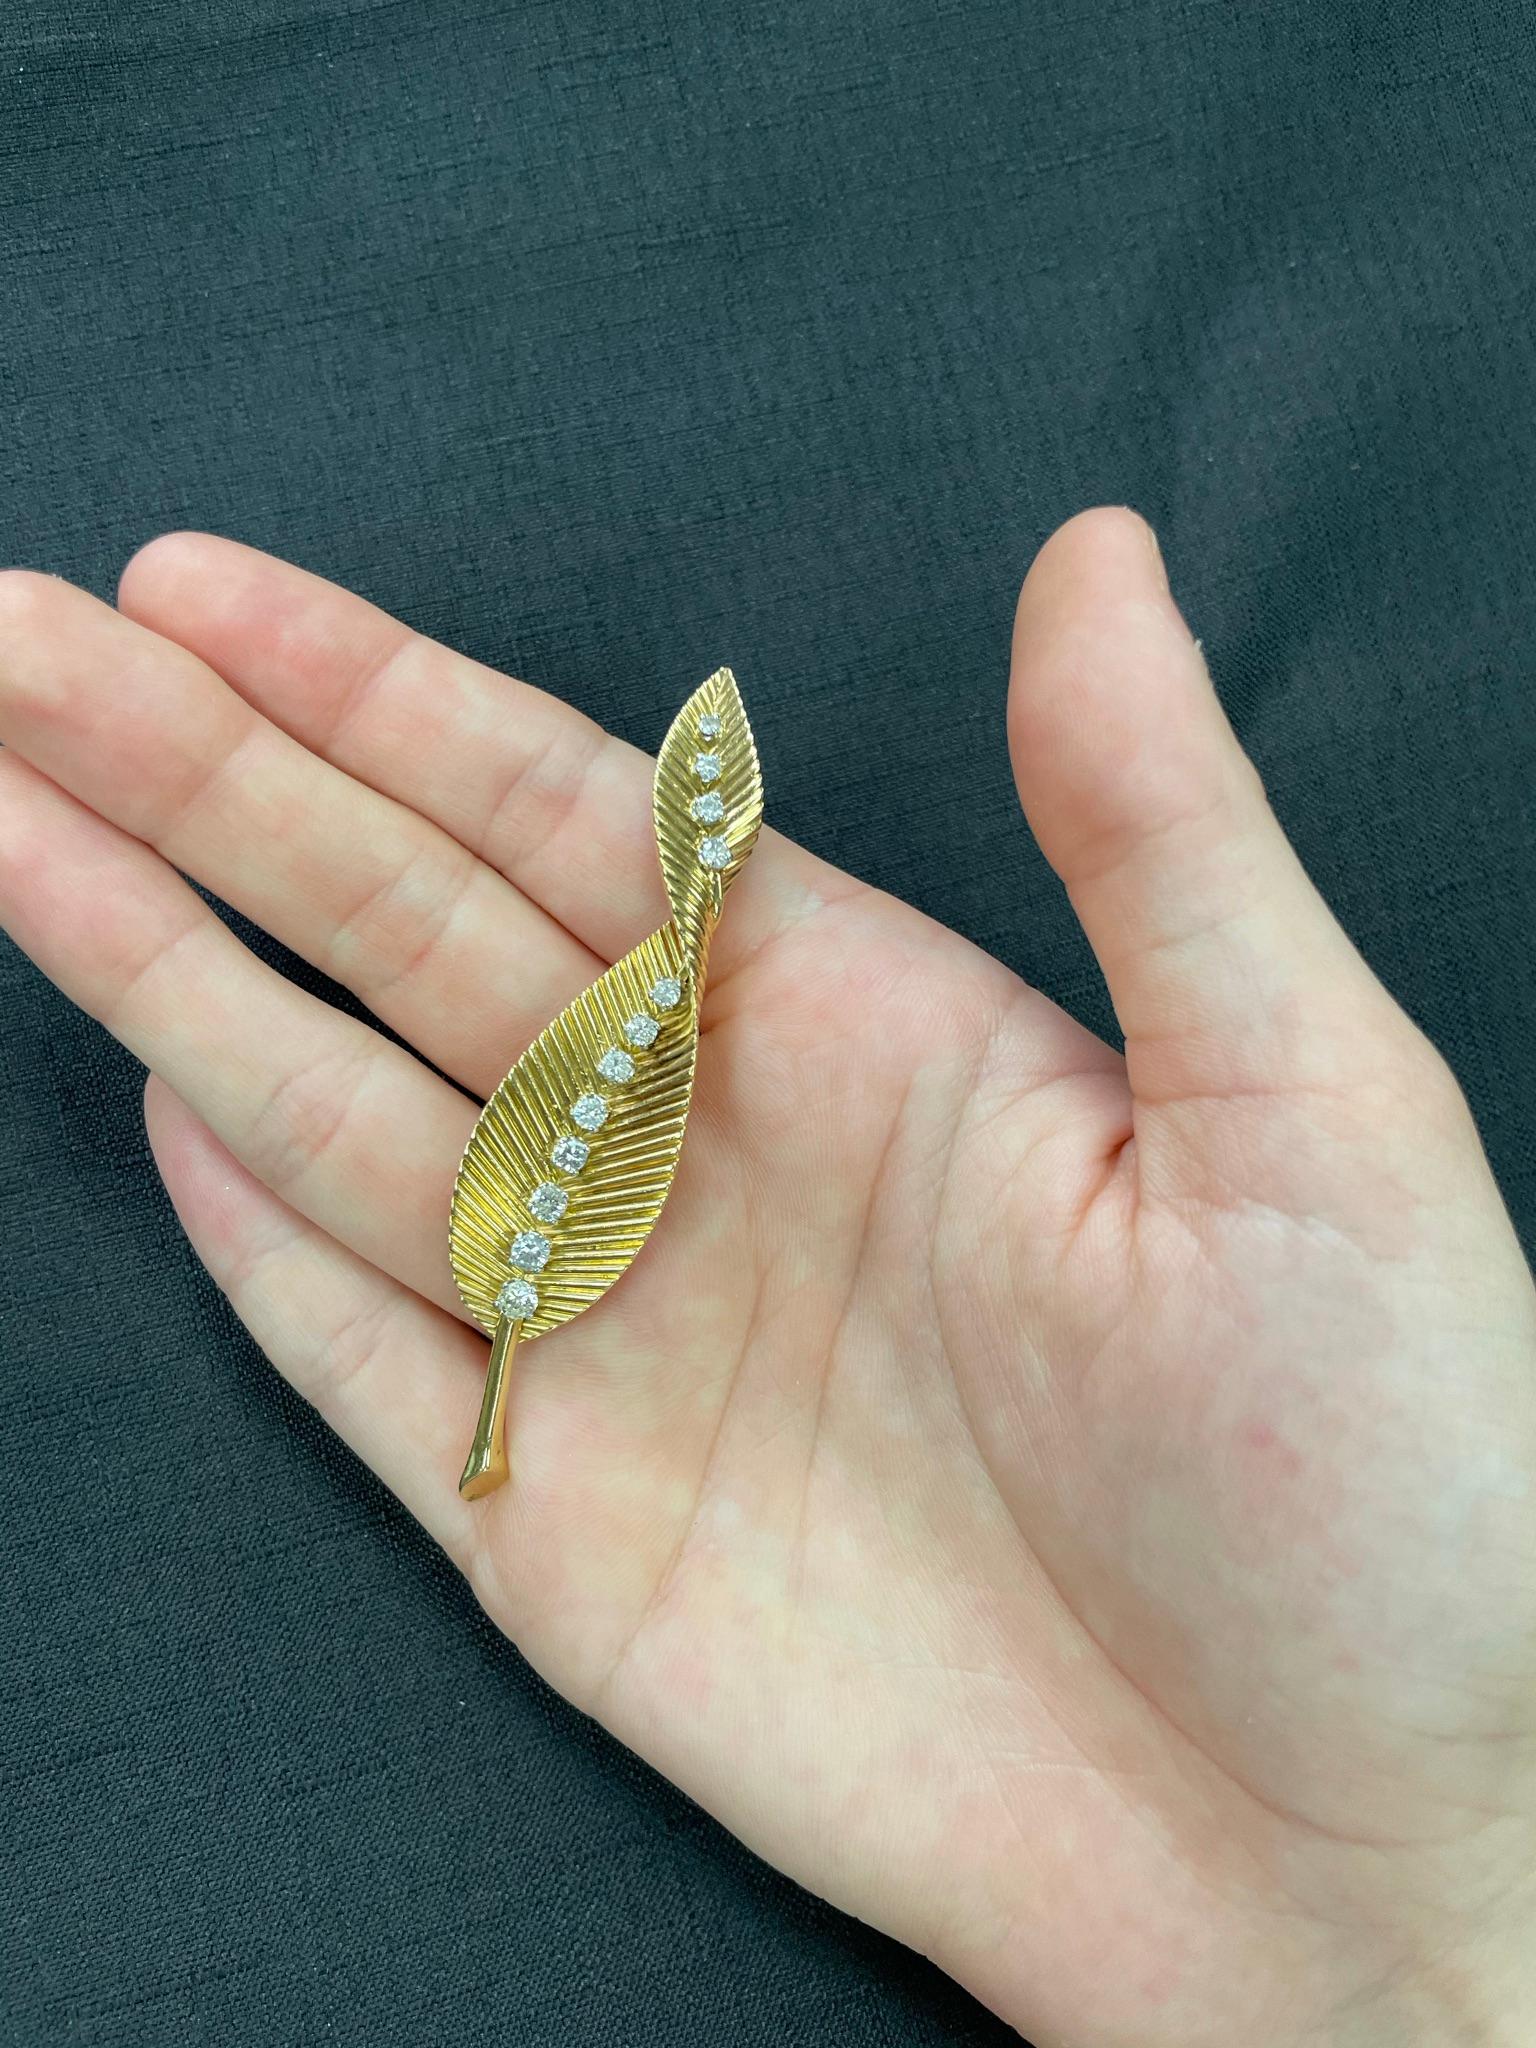 Women's or Men's French Van Cleef & Arpels Leaf Brooch Pin with Diamonds, 18 Karat Yellow Gold